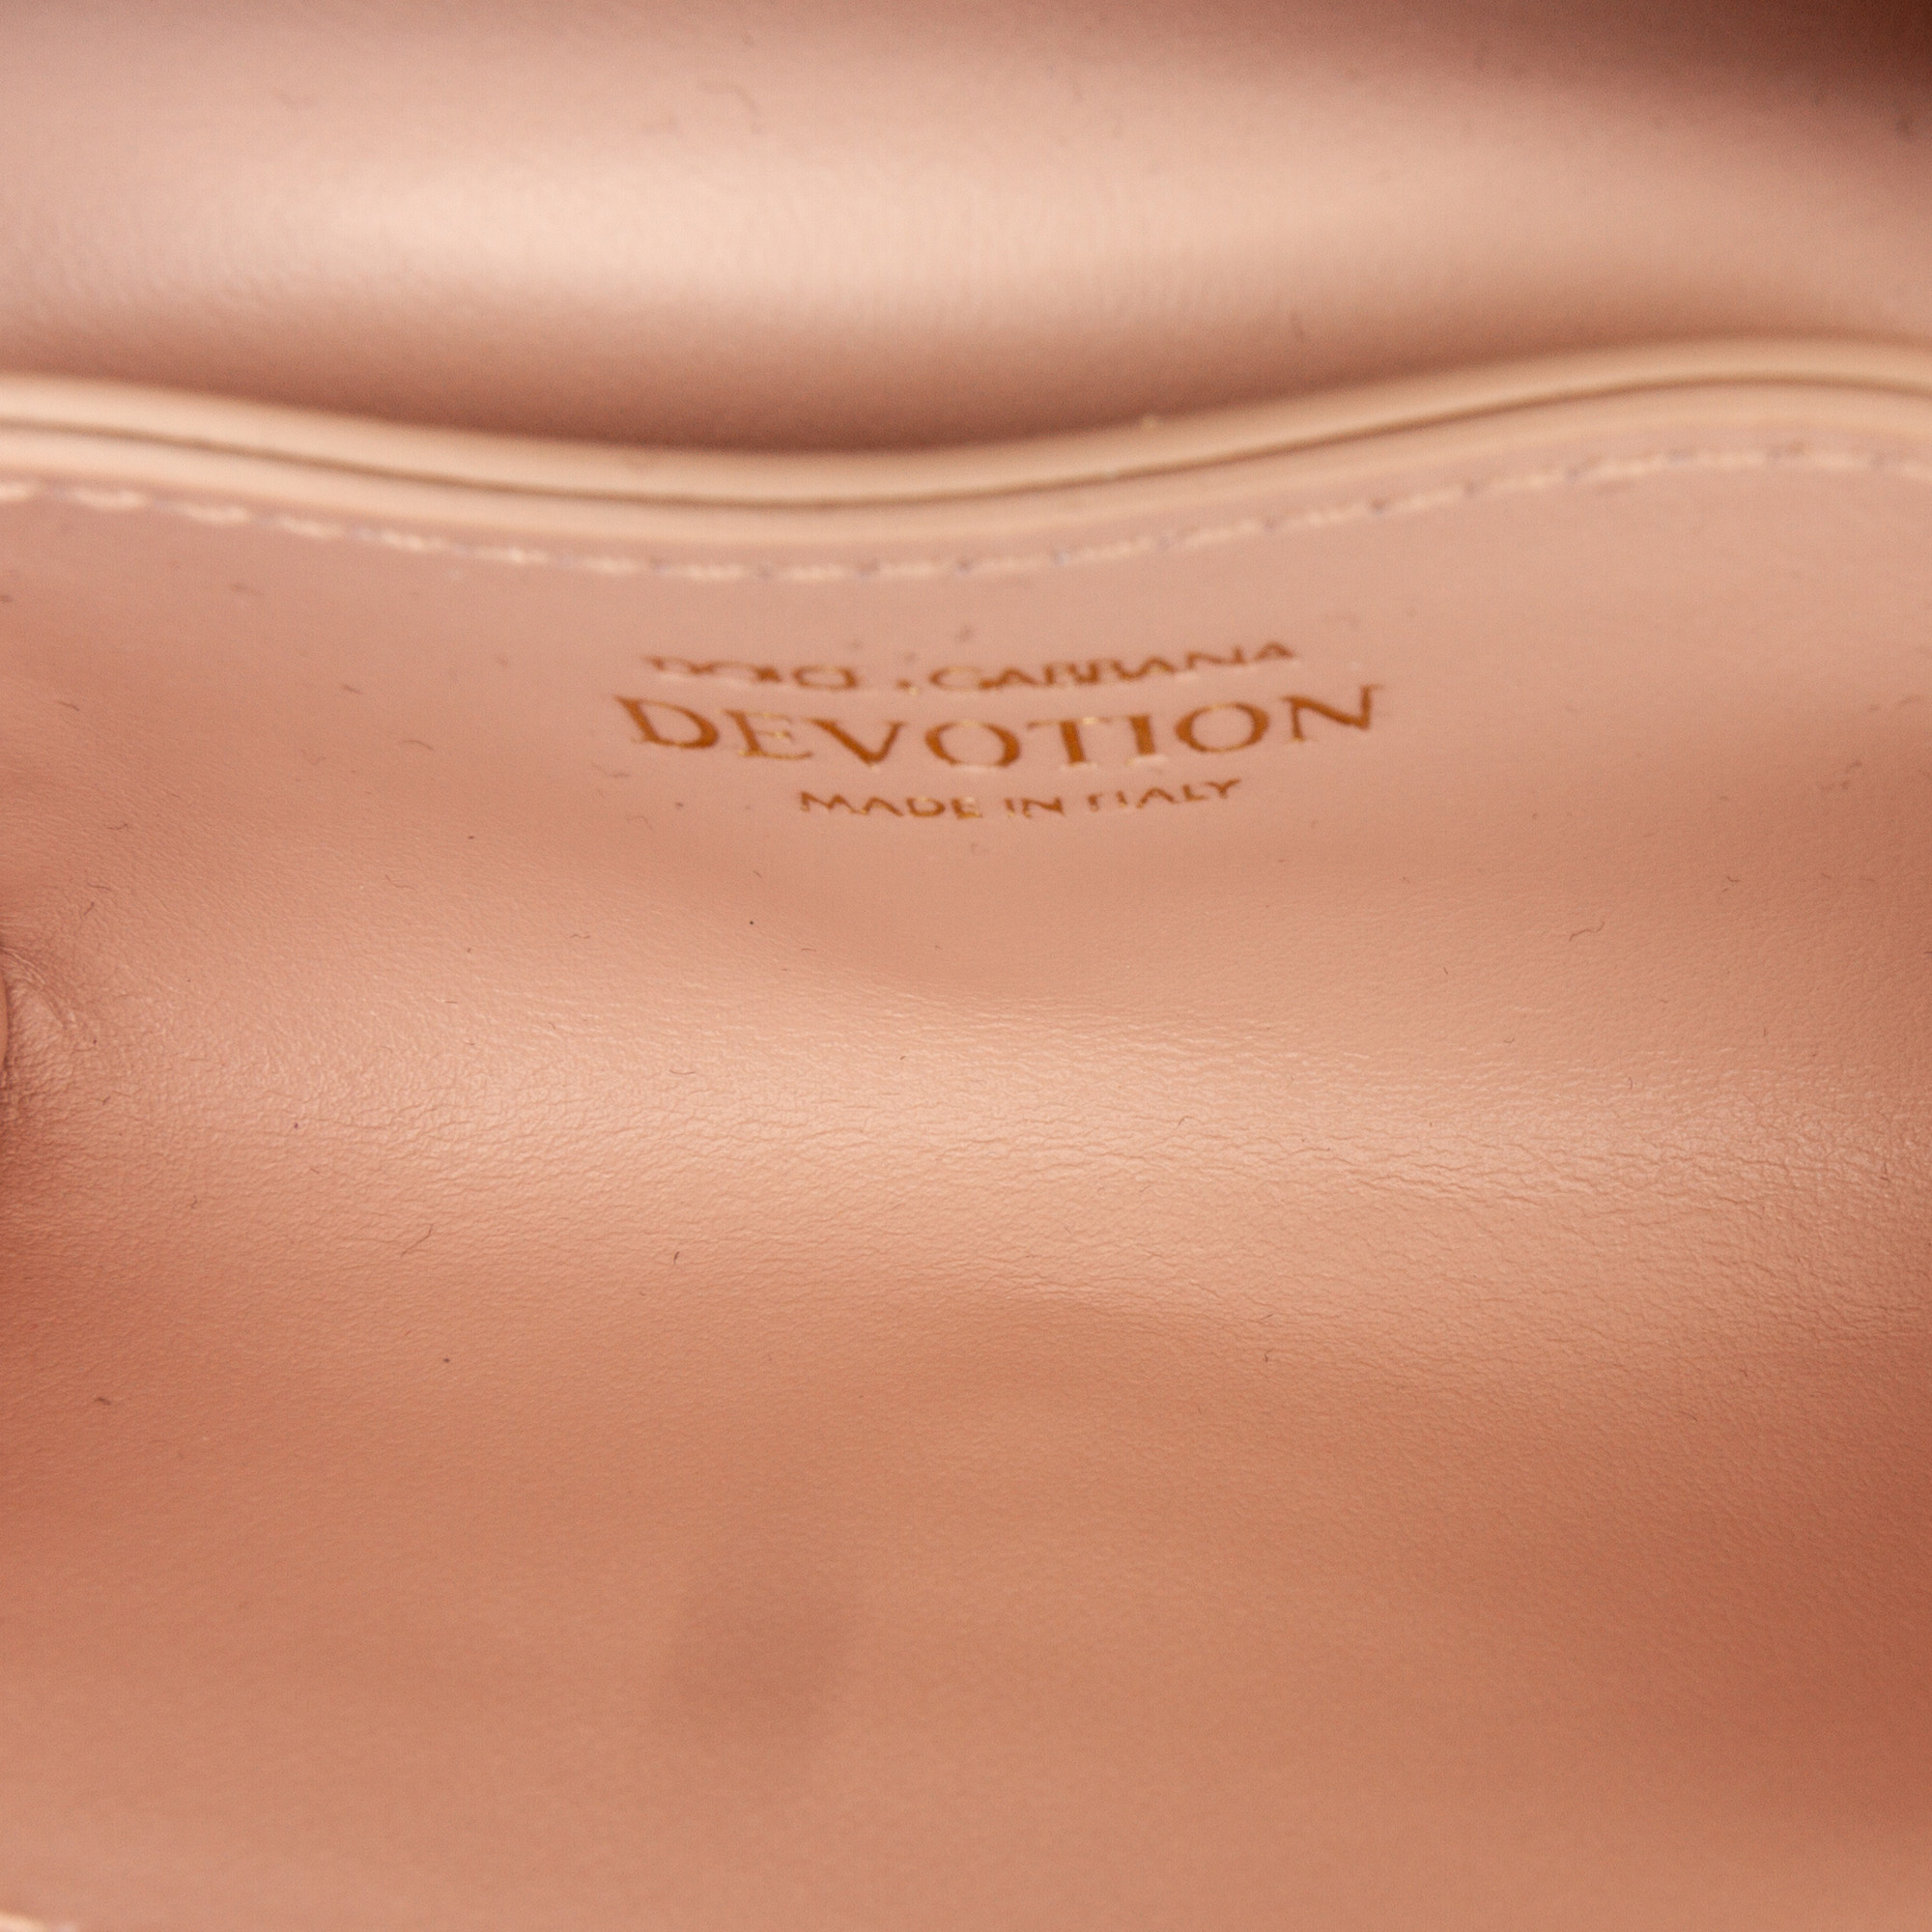 Dolce & Gabbana Pink Mini Devotion Crossbody Bag